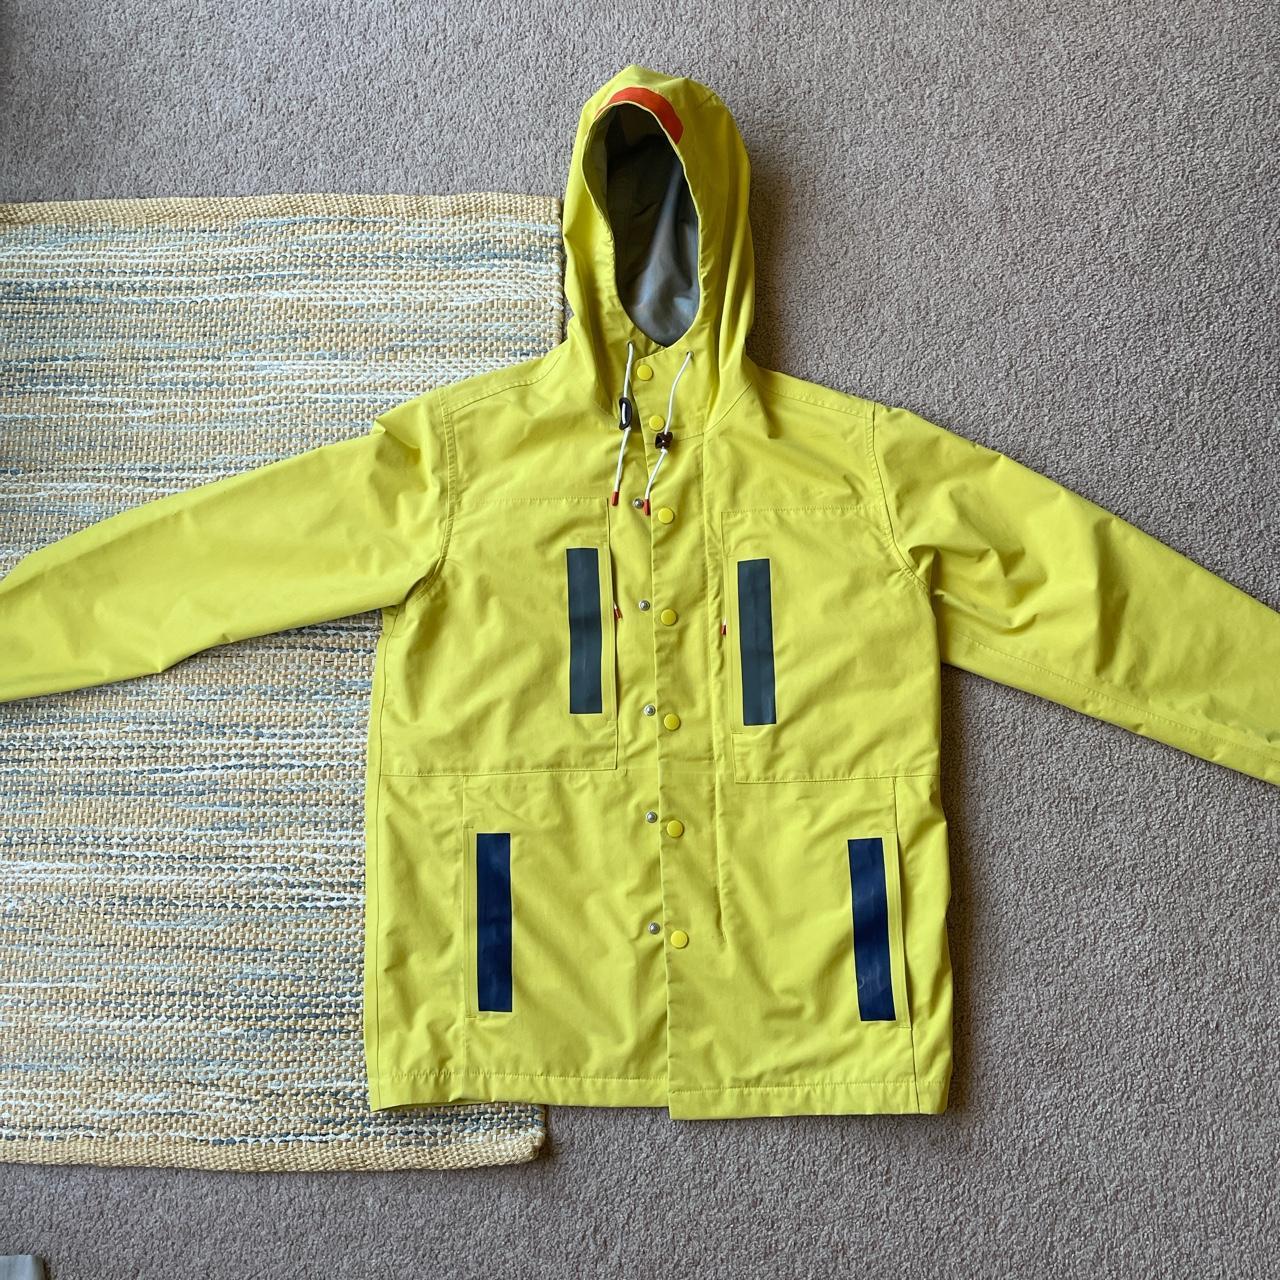 Product Image 1 - Poler Duck rain jacket
Simple, retro